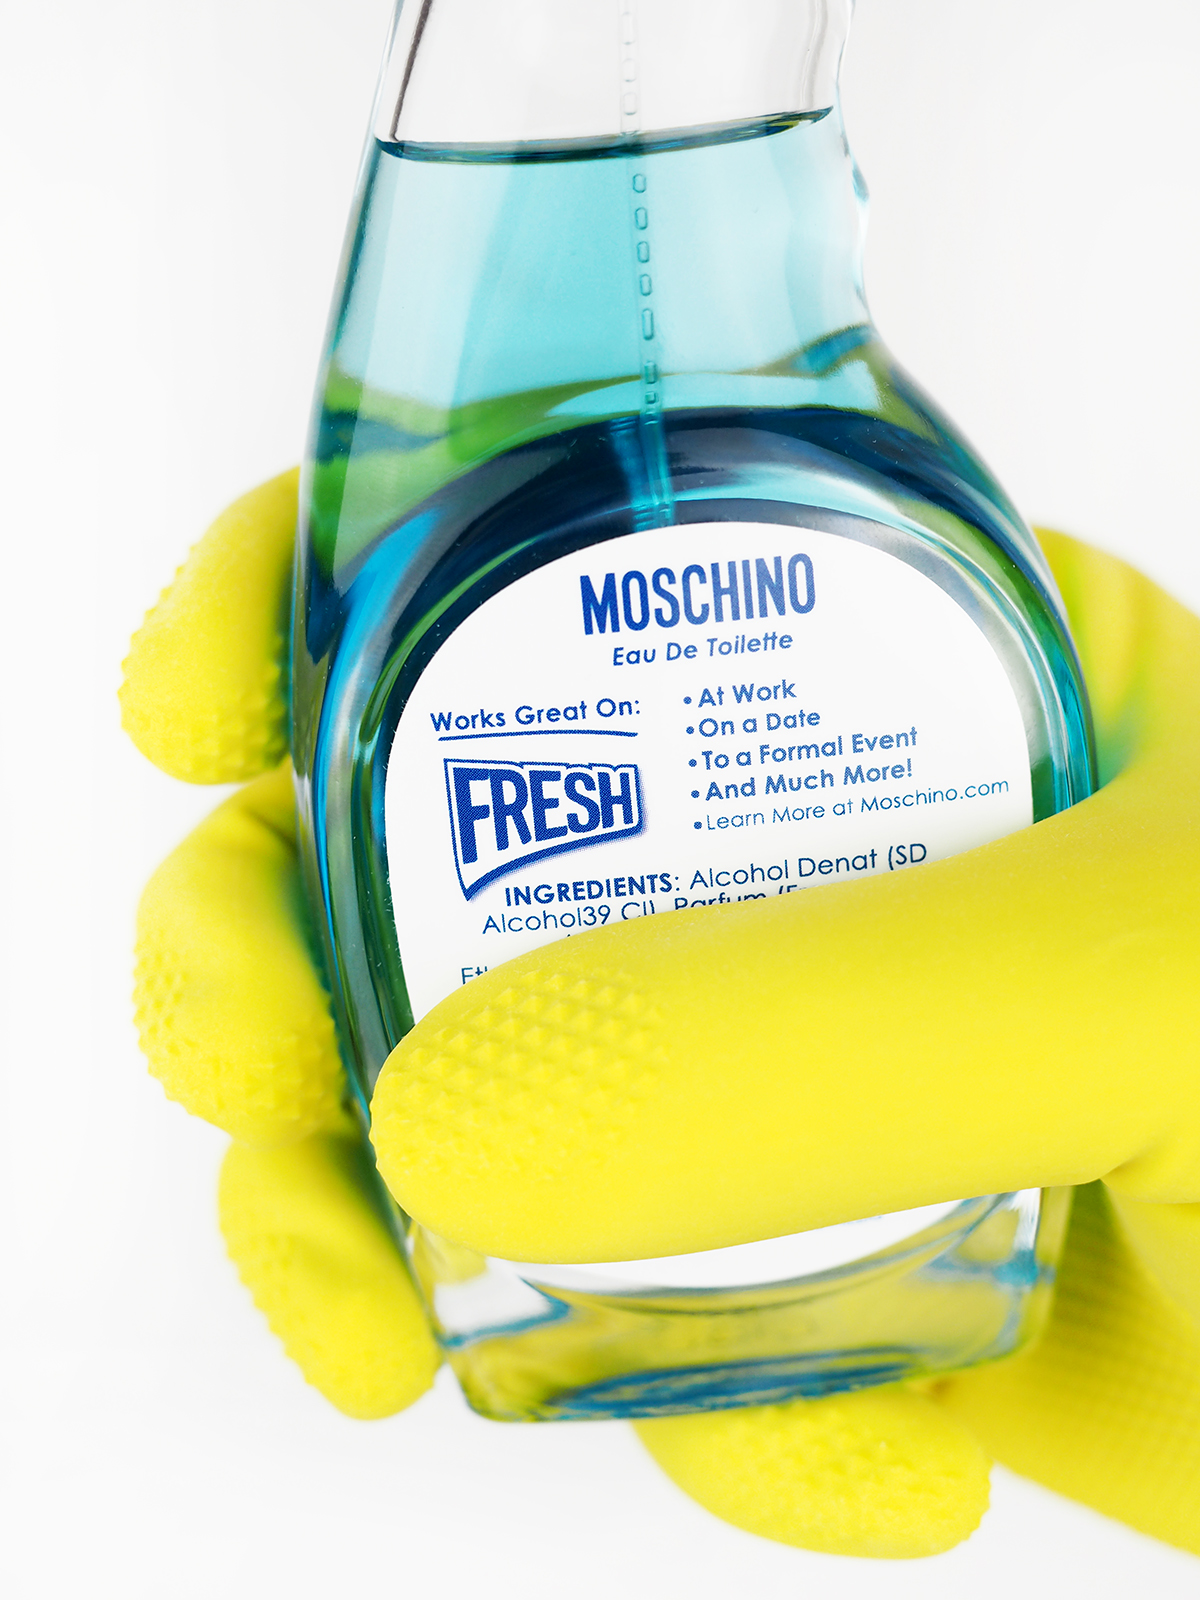 Moschino Fresh Eau de Toilette / Foxycheeks